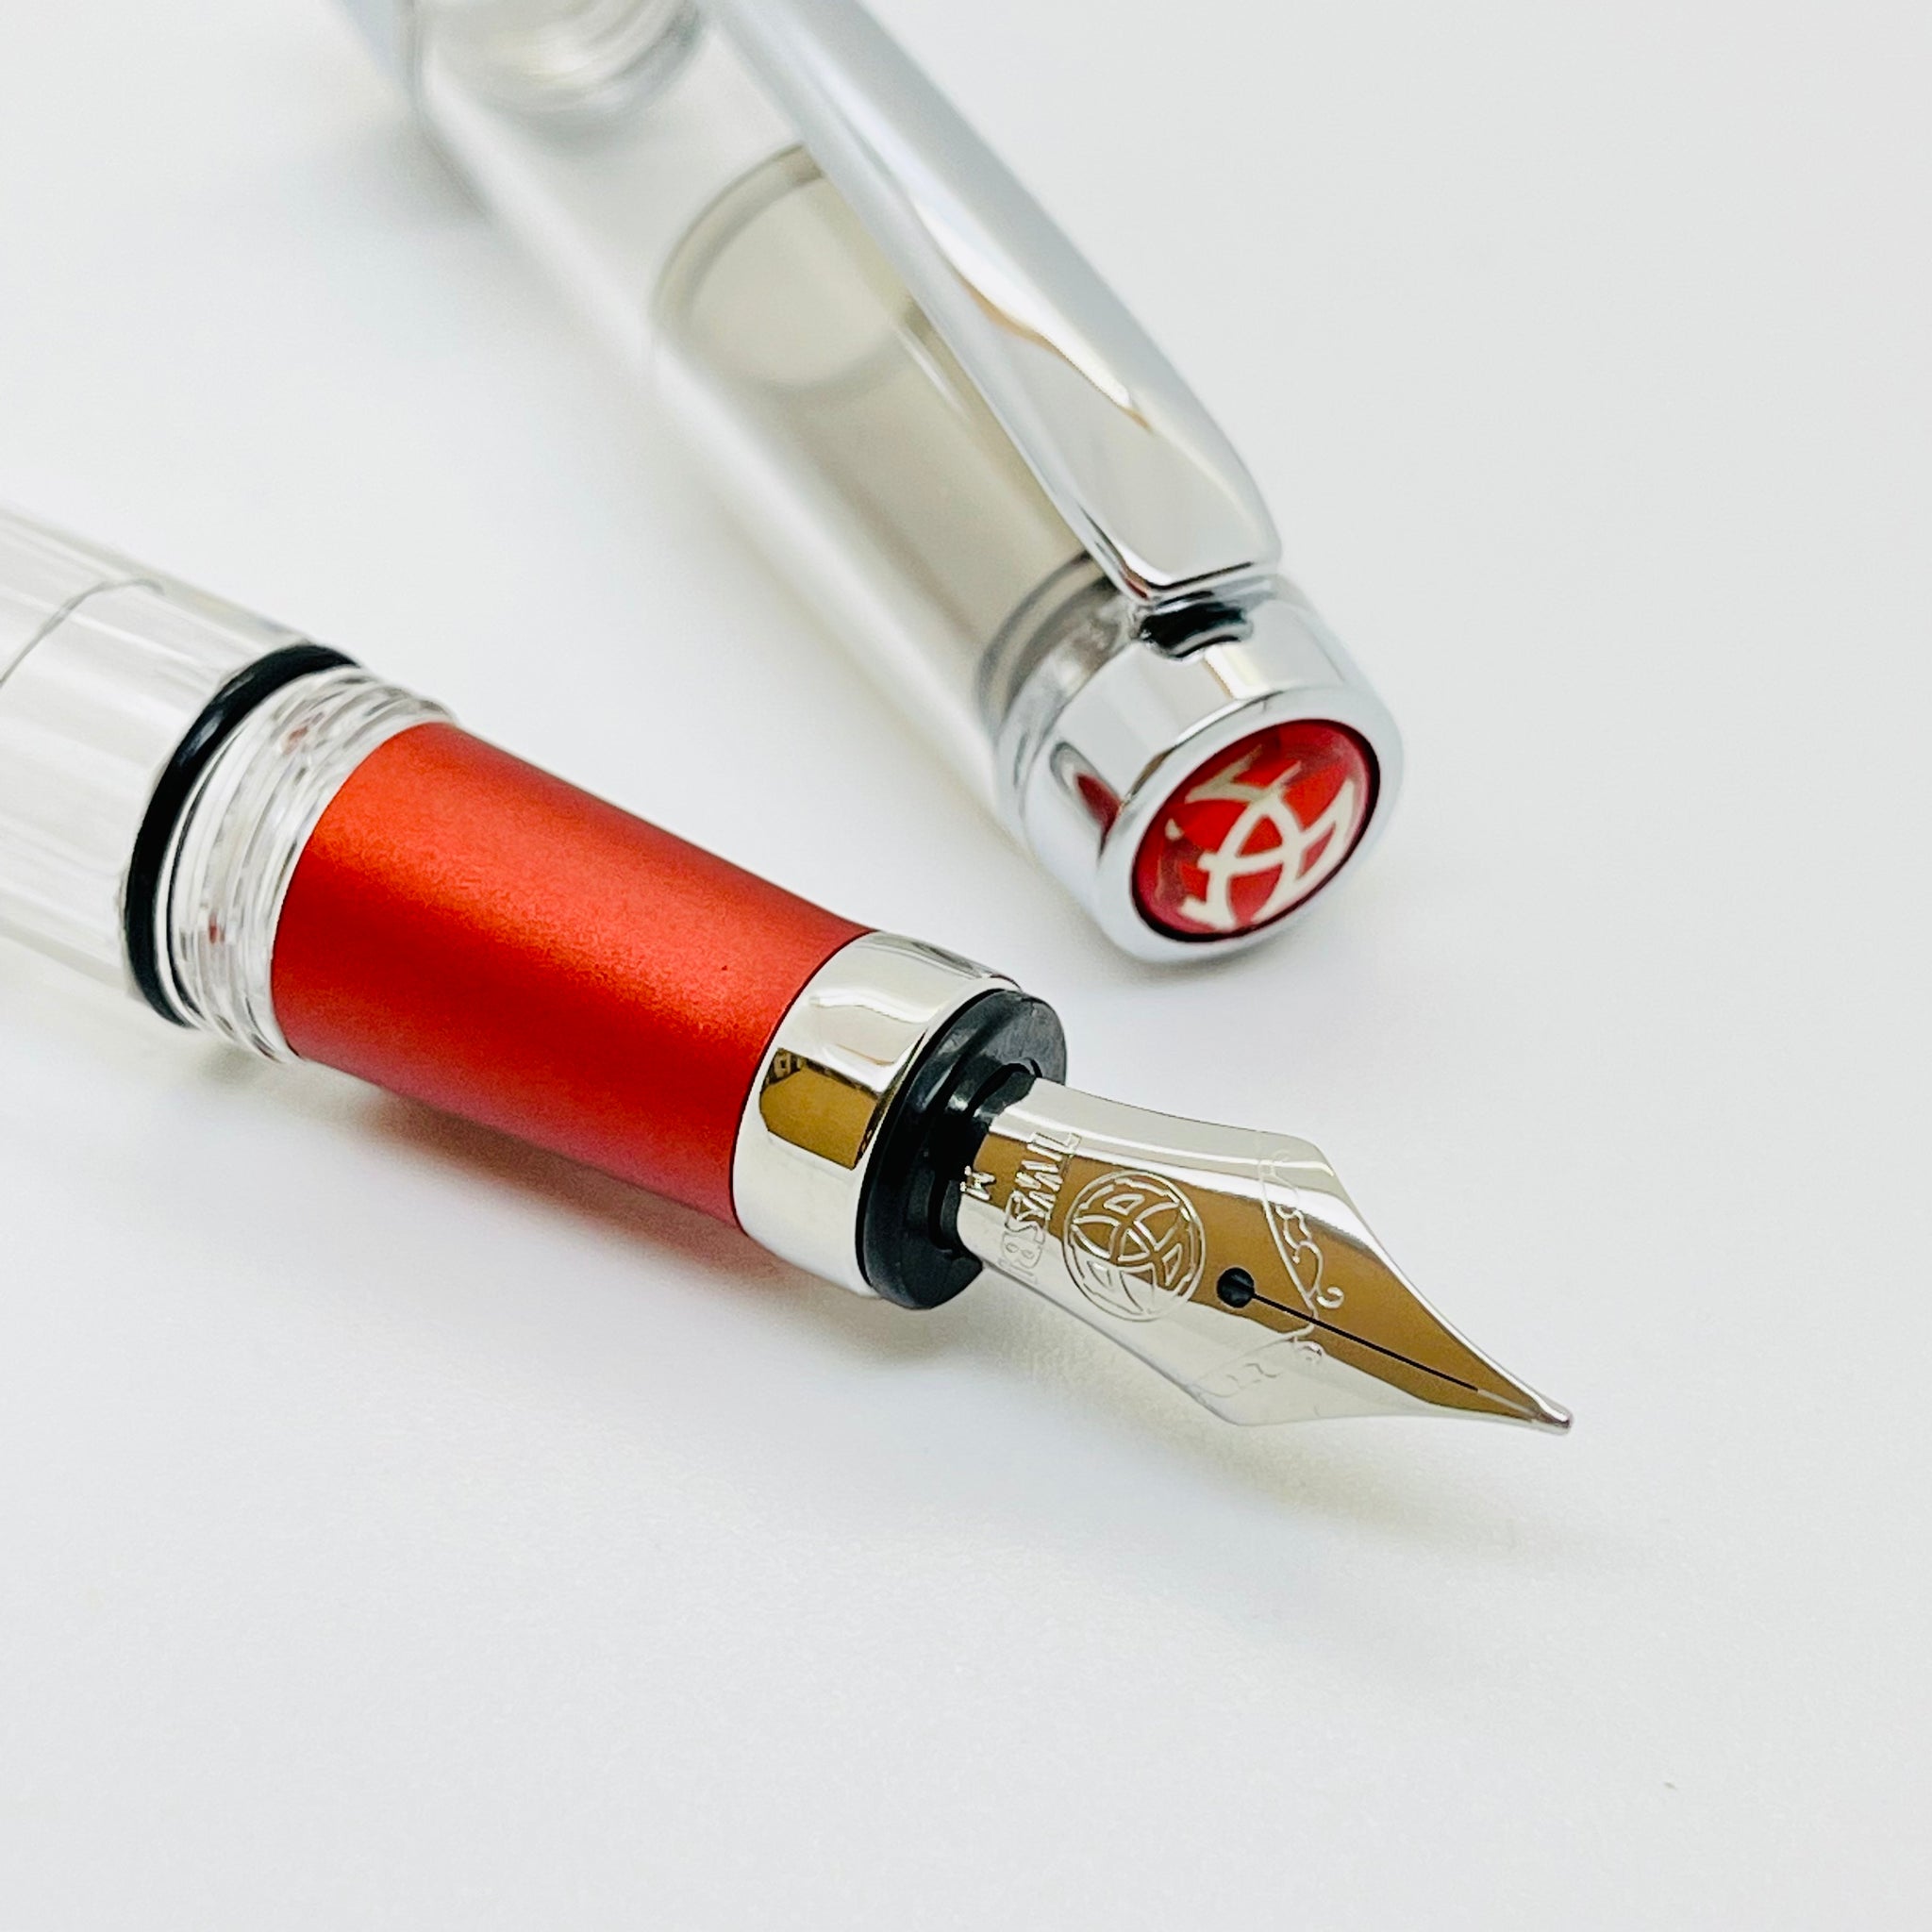 TWSBI Fountain Pen Diamond 580 RBT Ruby Red, The Beauty of The